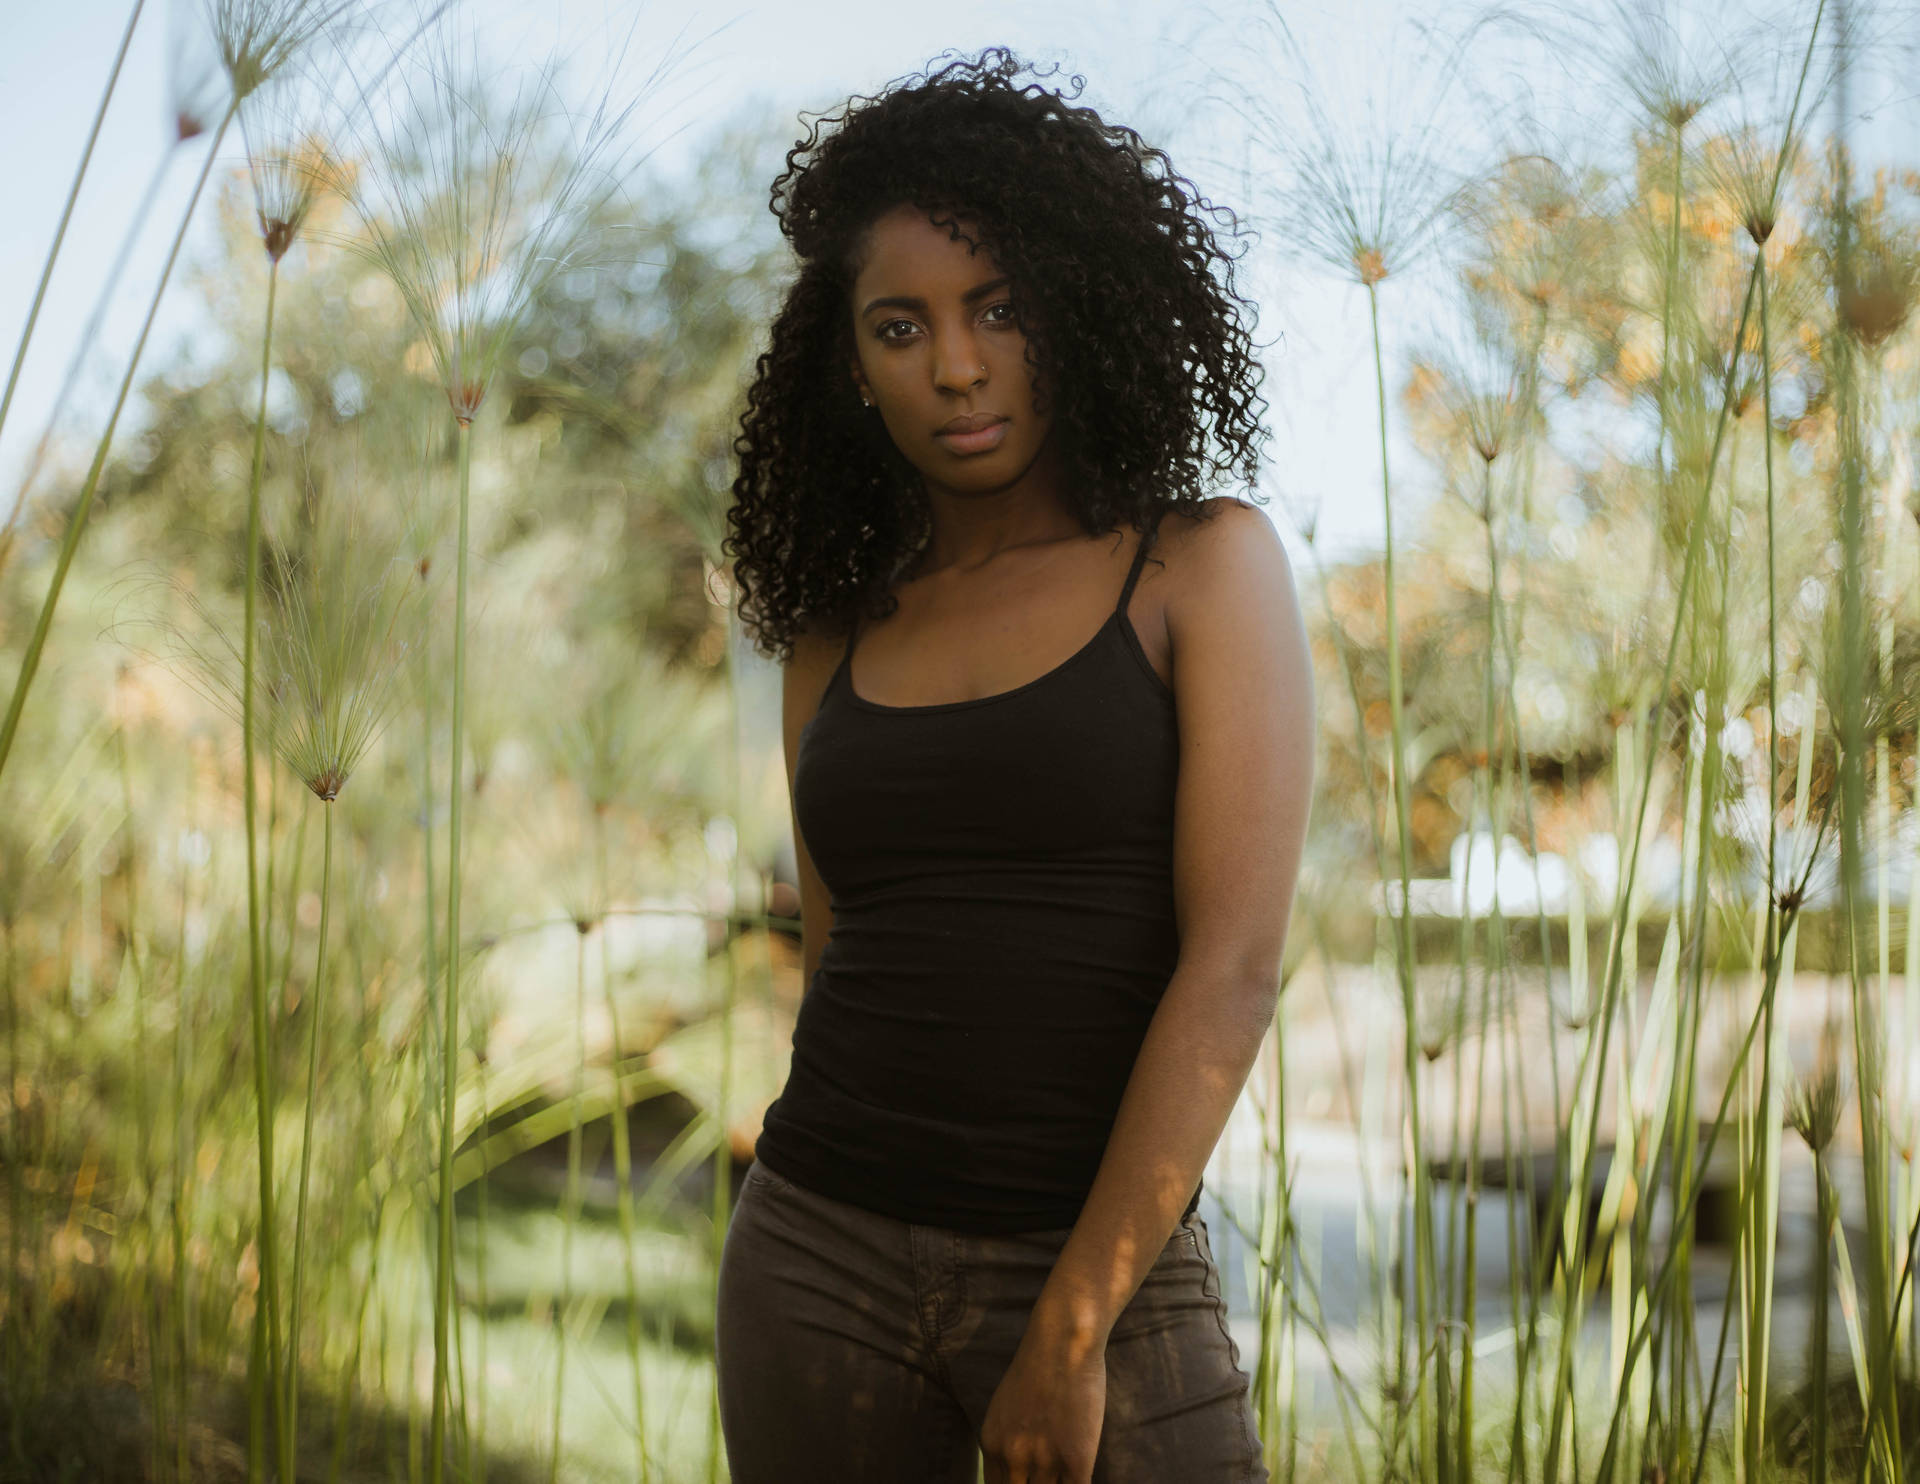 Caption: Radiant Confidence - Portrait Of A Beautiful Black Girl Wallpaper